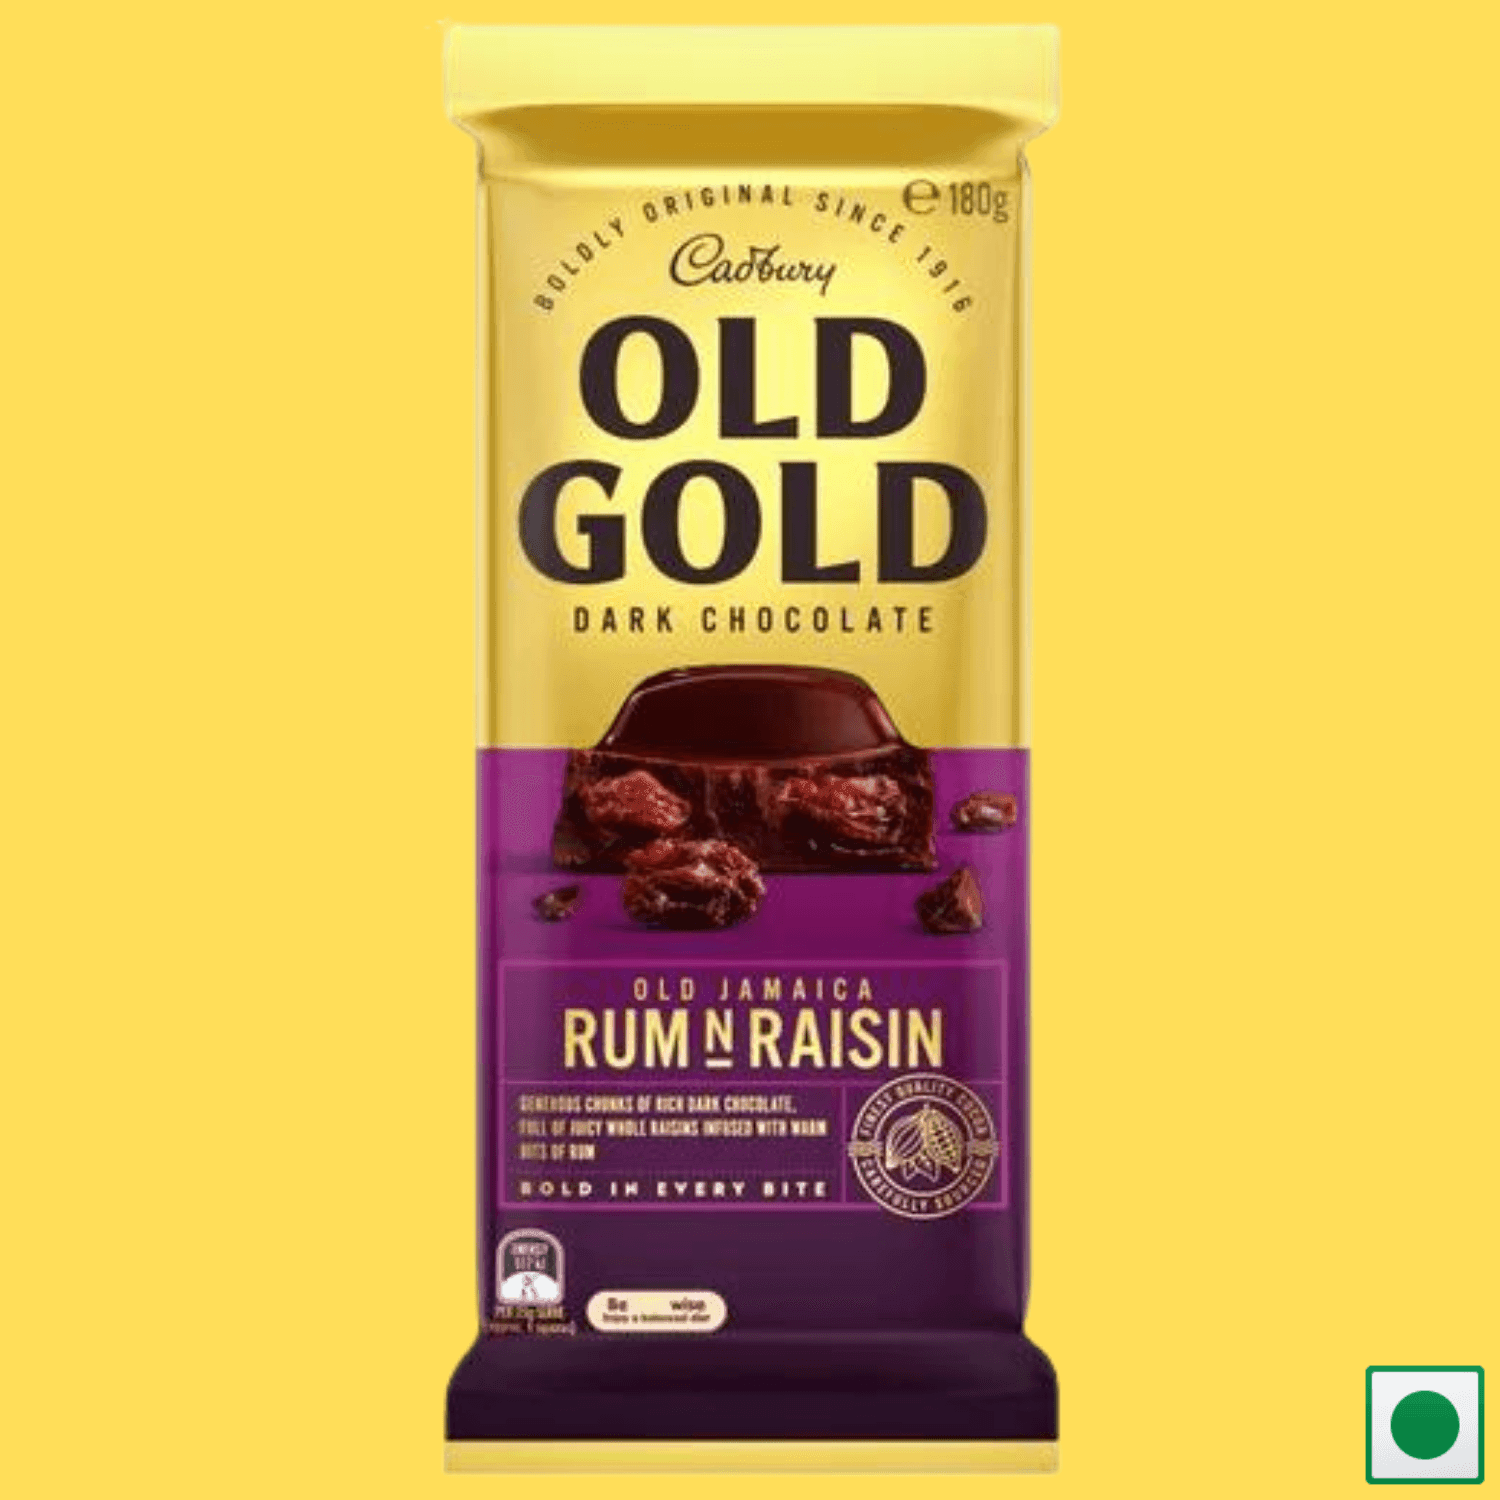 Cadbury Old Gold Dark Chocolate Old Jamaica Rum N Raisin, 180g (Australian Imported) - Super 7 Mart